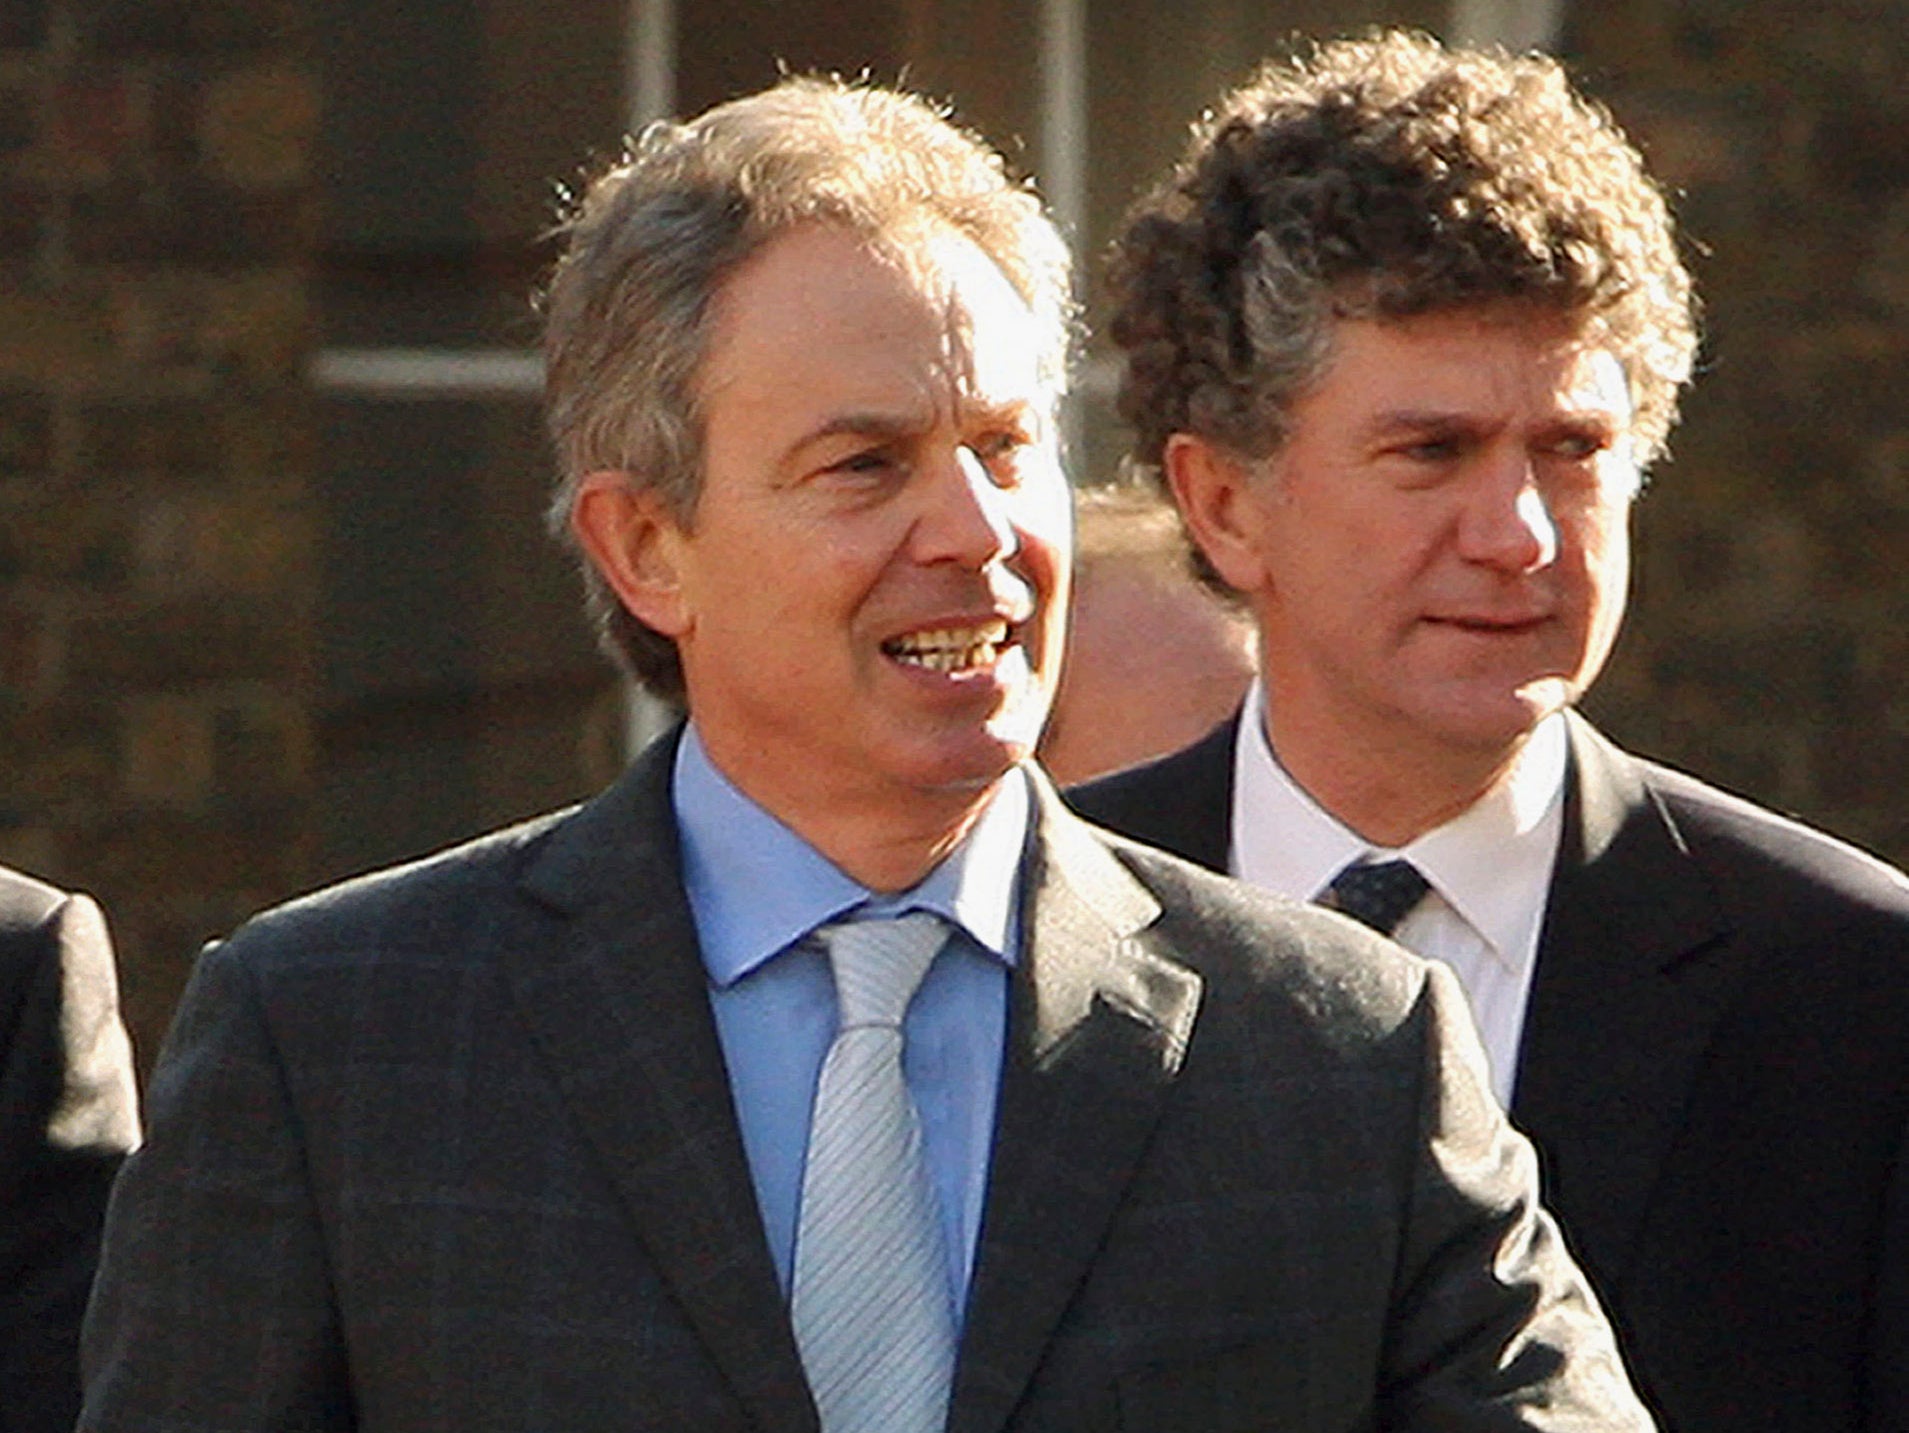 Jonathan Powell was top adviser to Tony Blair